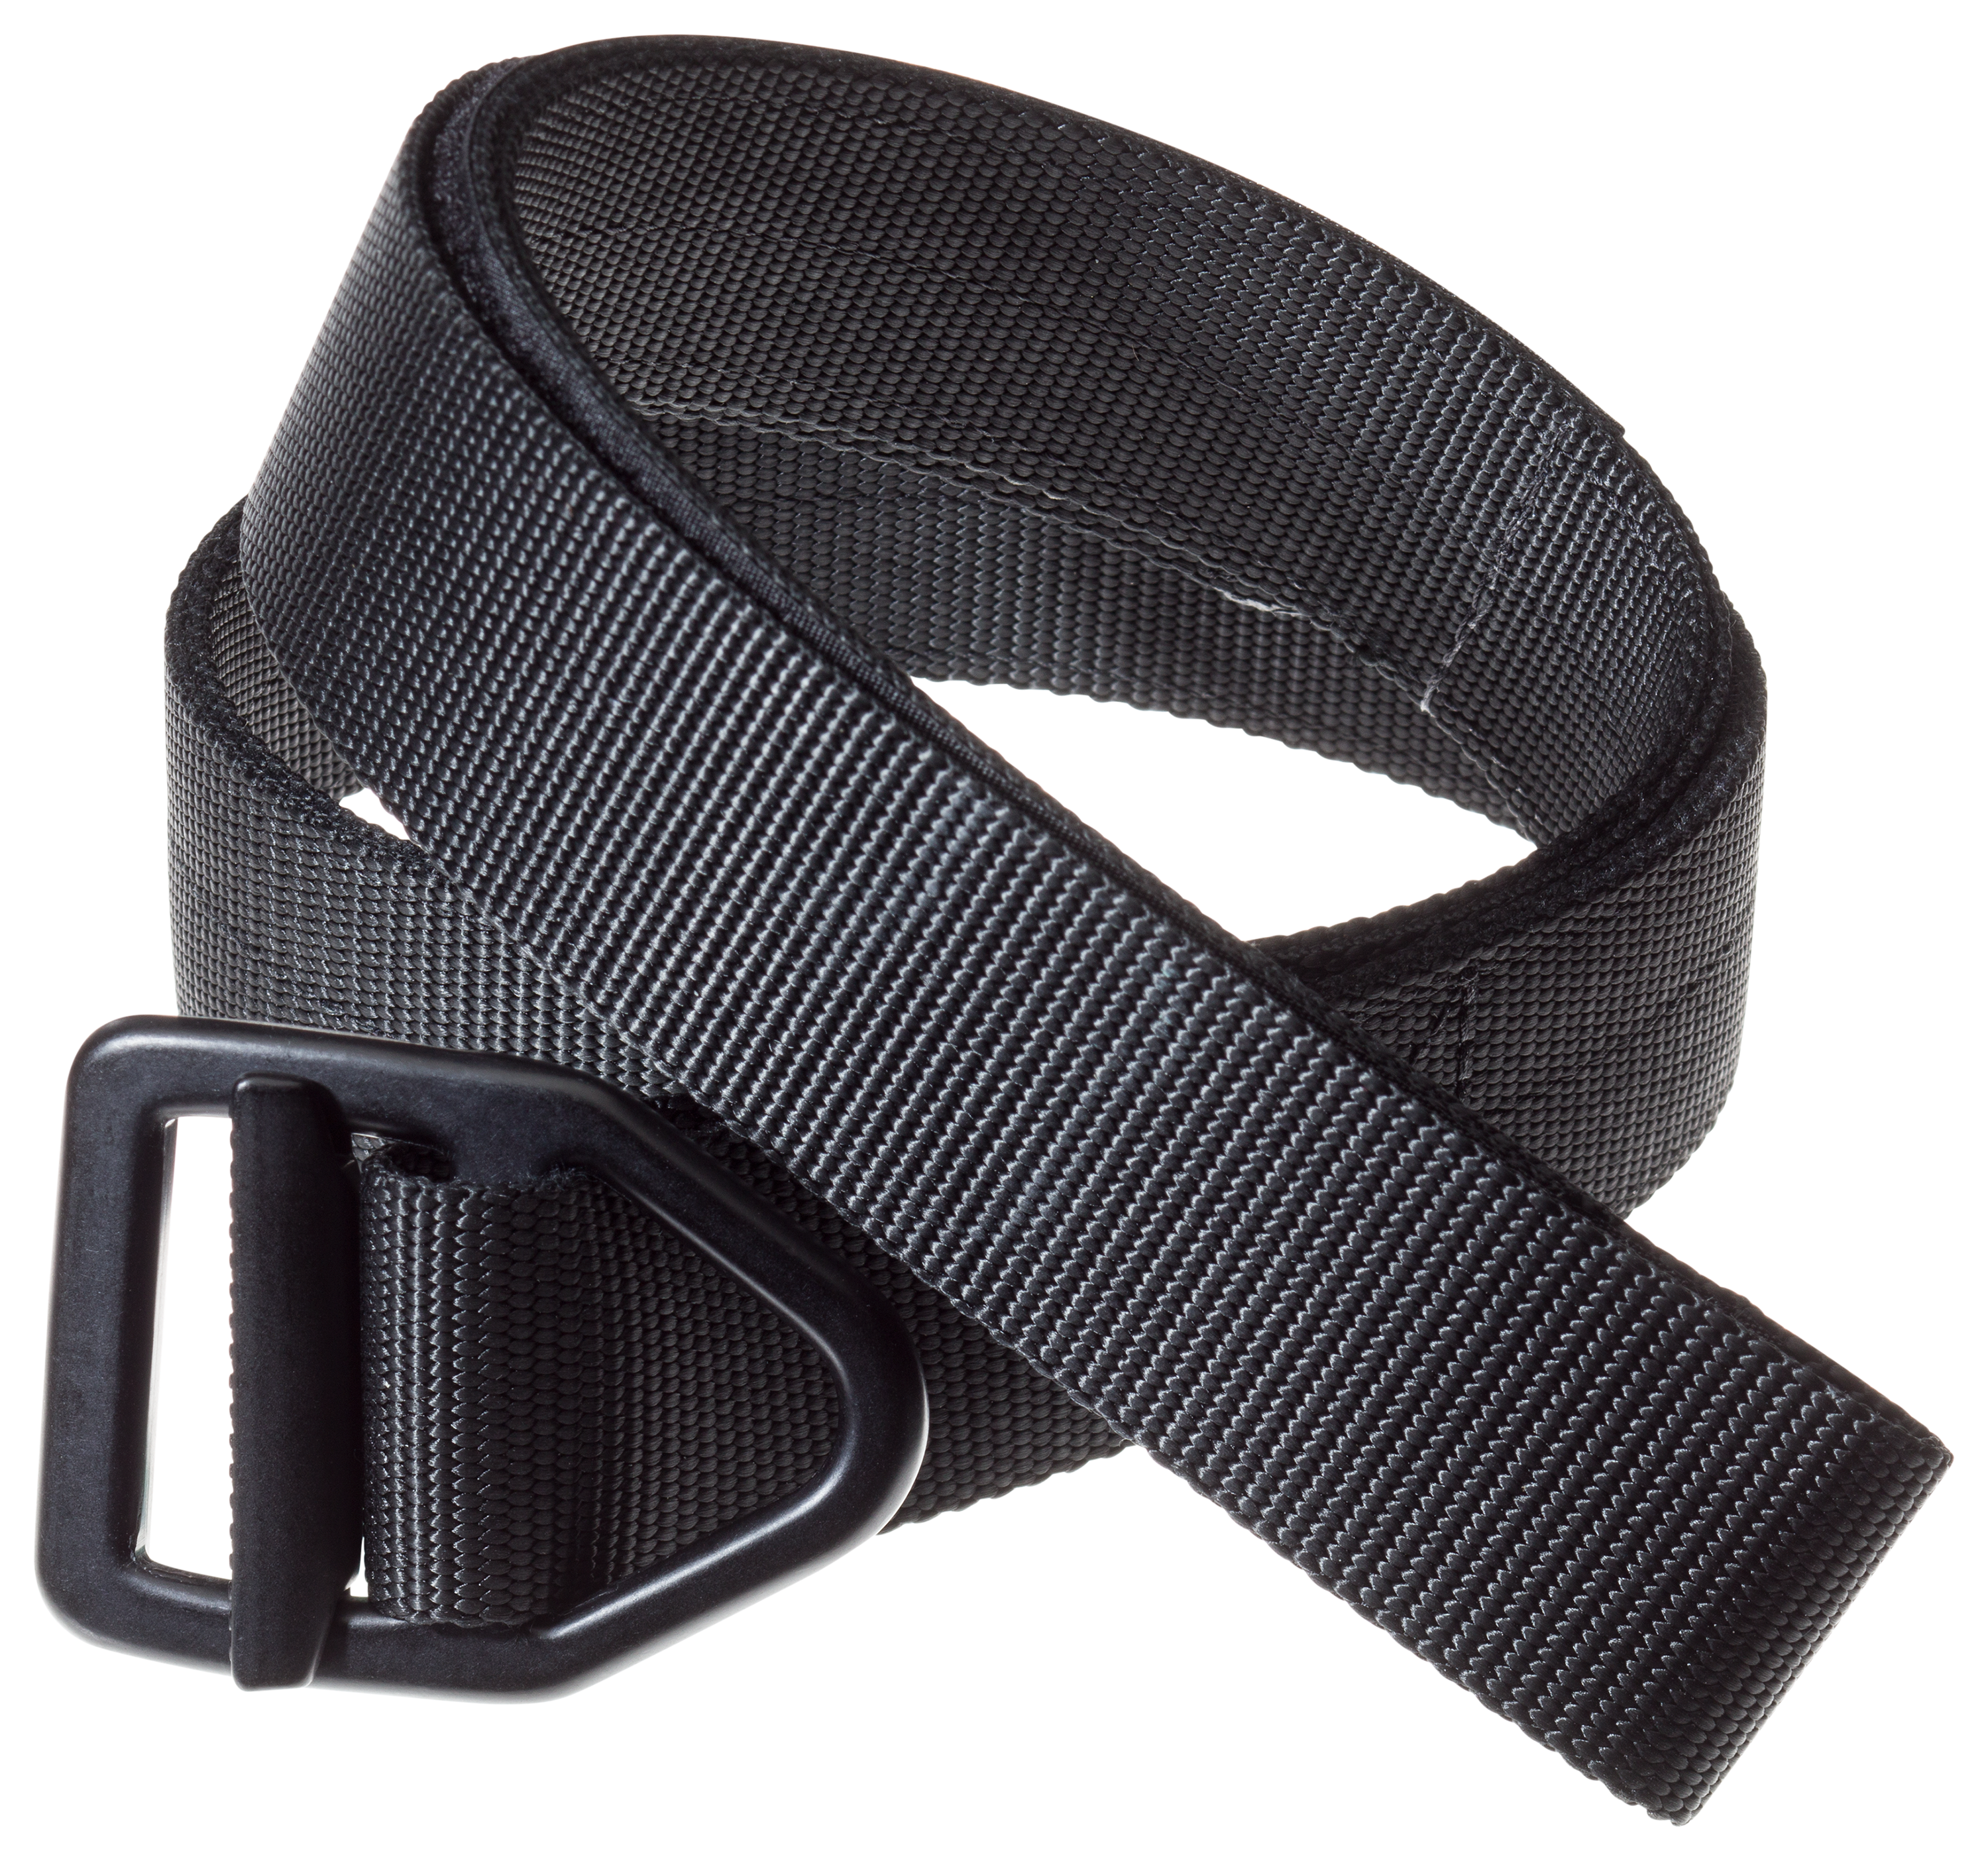 Instructor Gun Belt with Velcro® Brand Closure